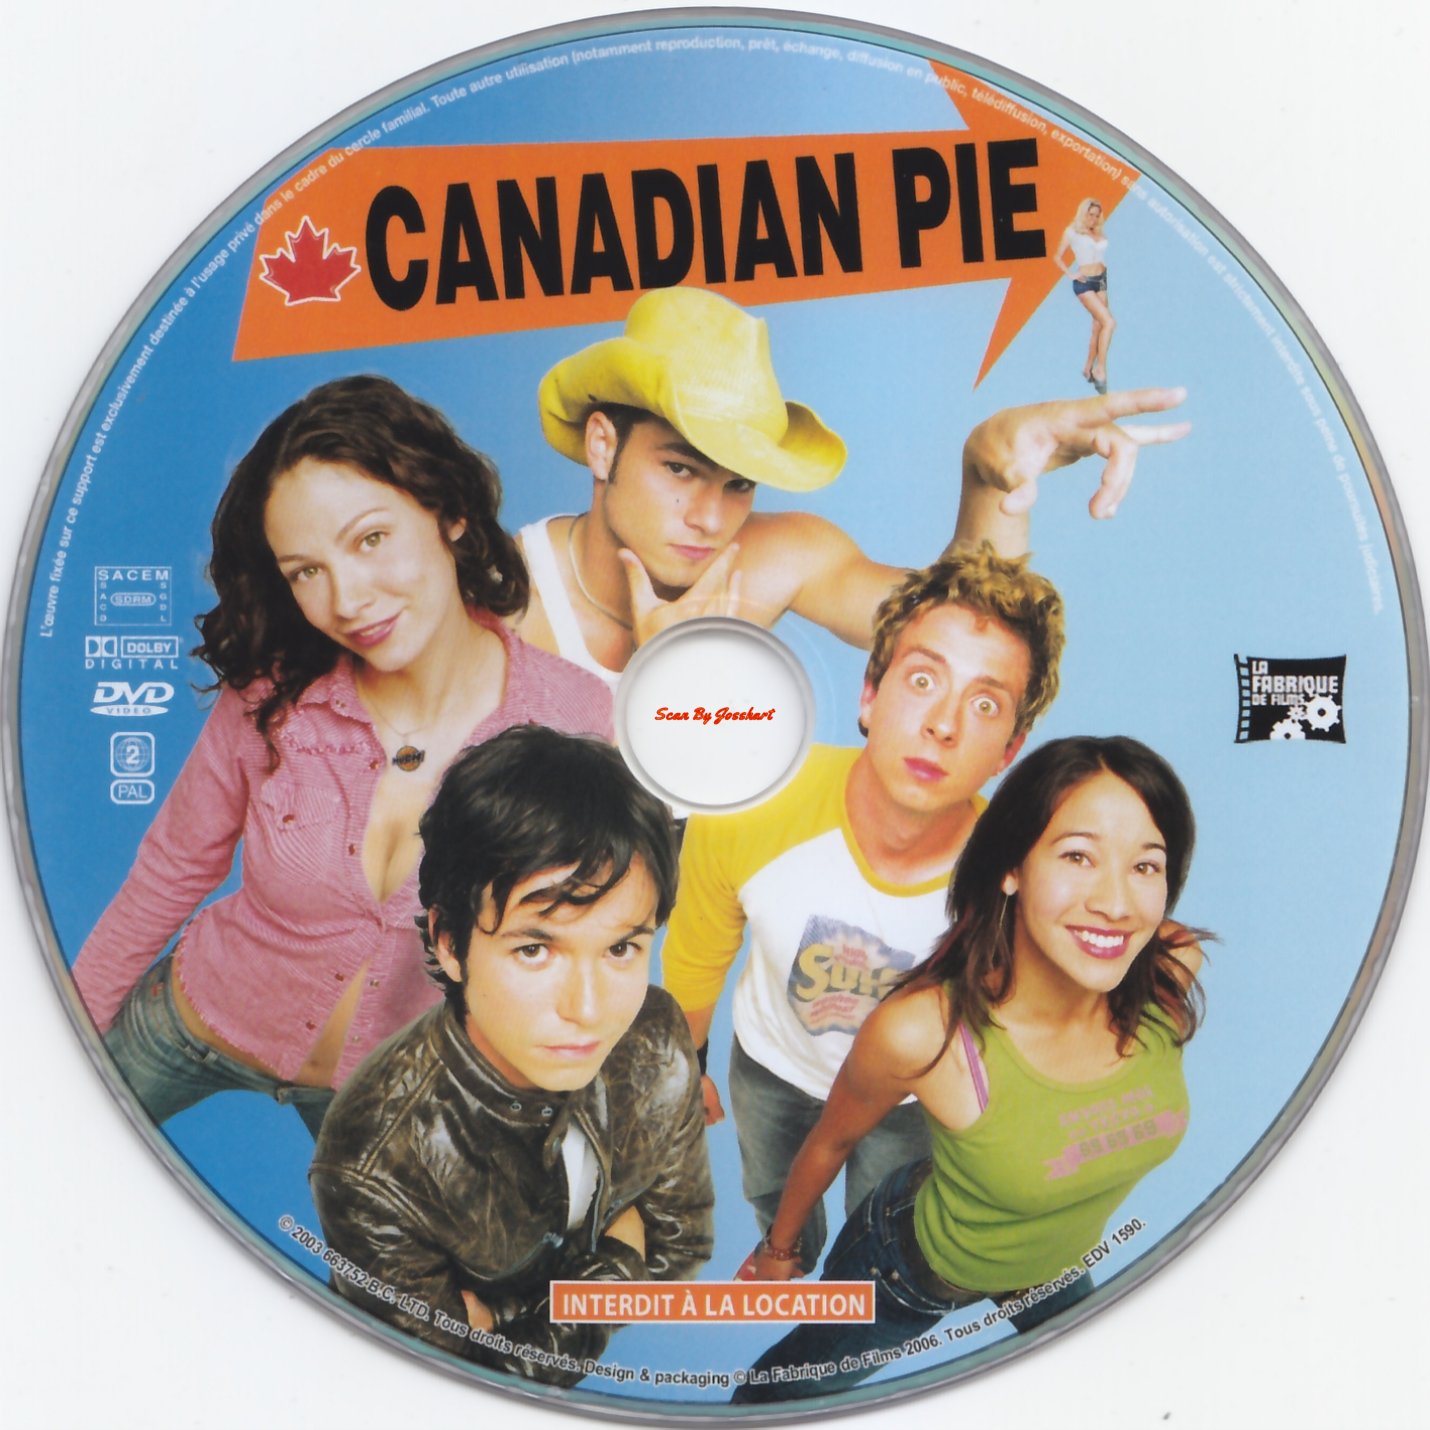 Canadian Pie